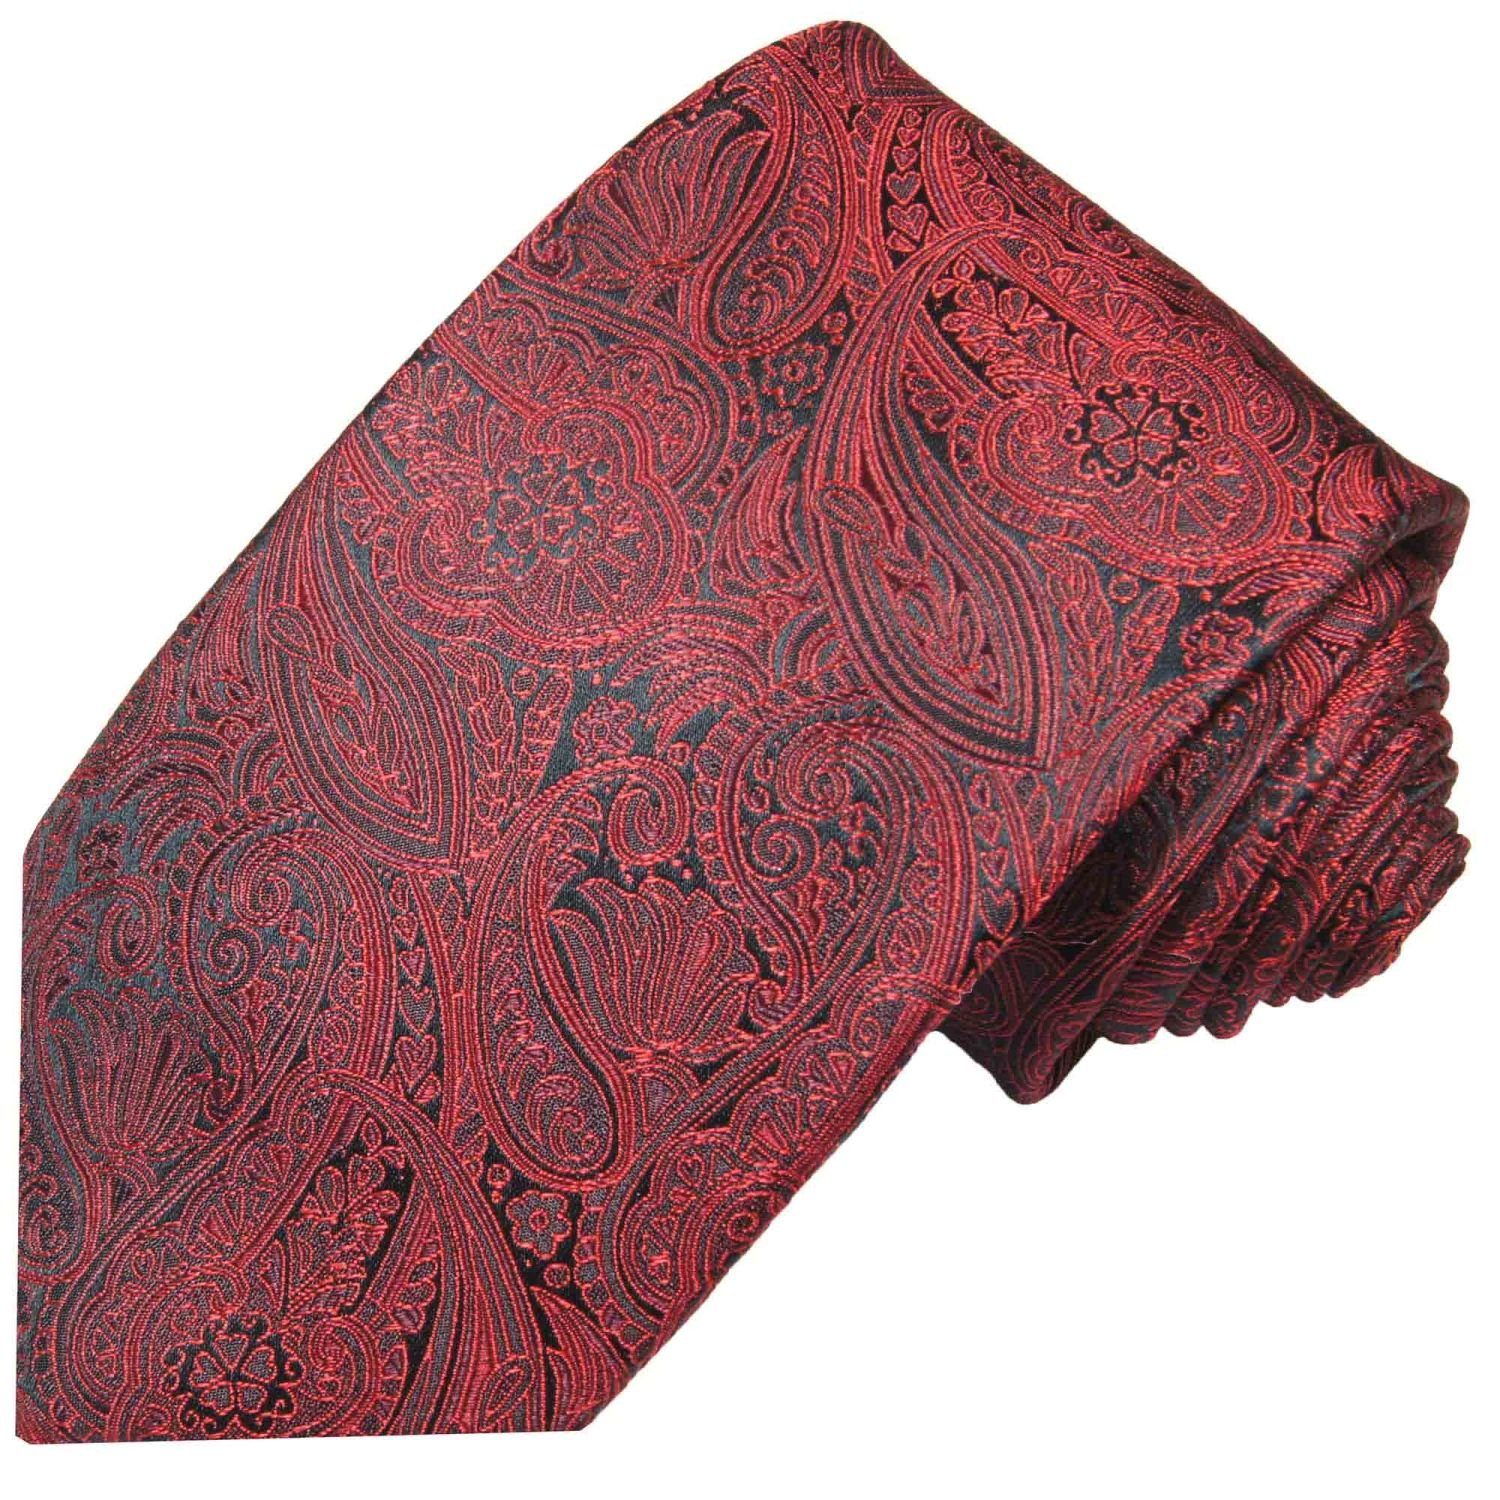 Paul Malone Krawatte Elegante paisley rot 100% Schlips Seidenkrawatte Herren brokat Breit 586 (8cm), Seide